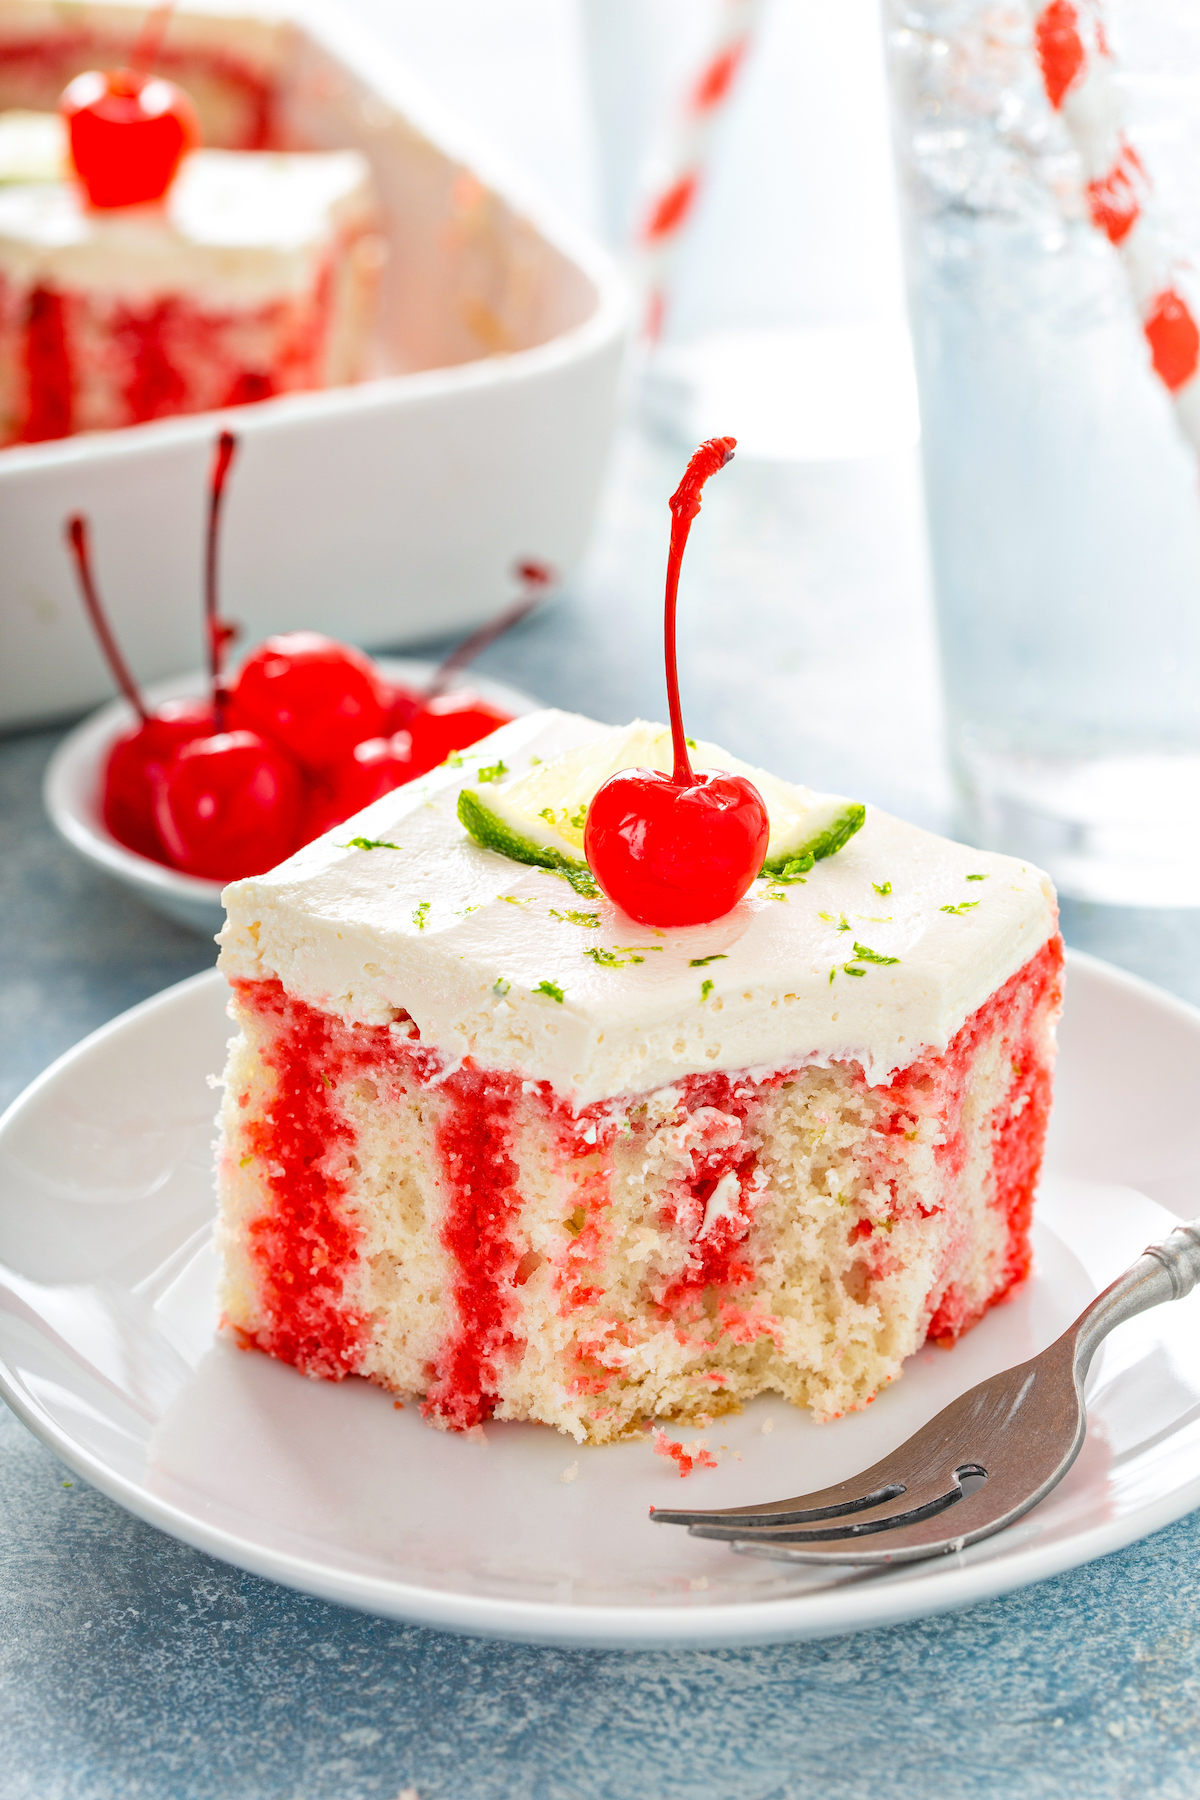 Easy Cherry Limeade Cake Recipe - The Novice Chef